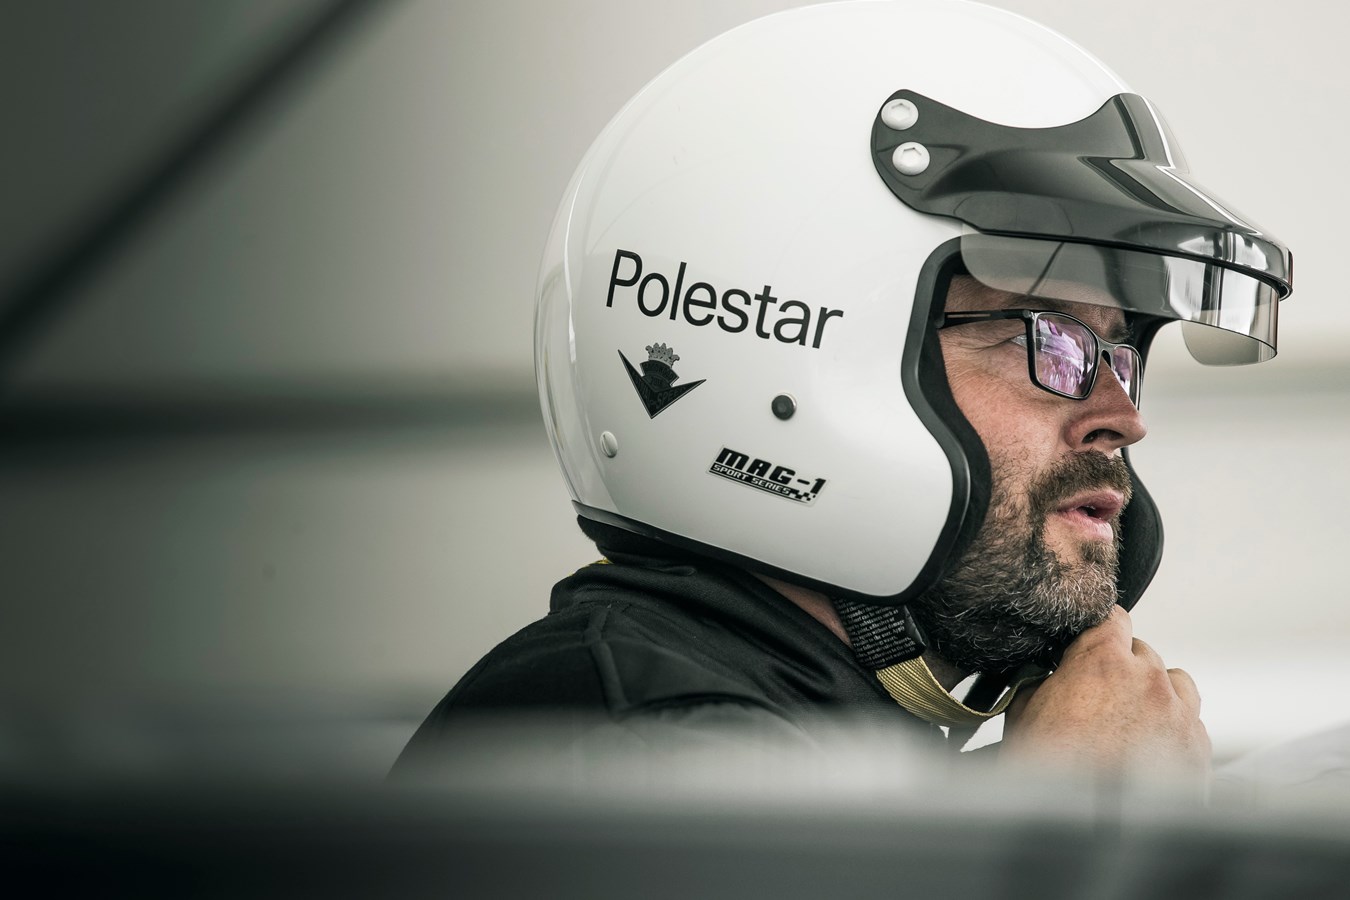 Joakim Rydholm startet mit dem Polestar 1 beim Goodwood Festival of Speed 2018